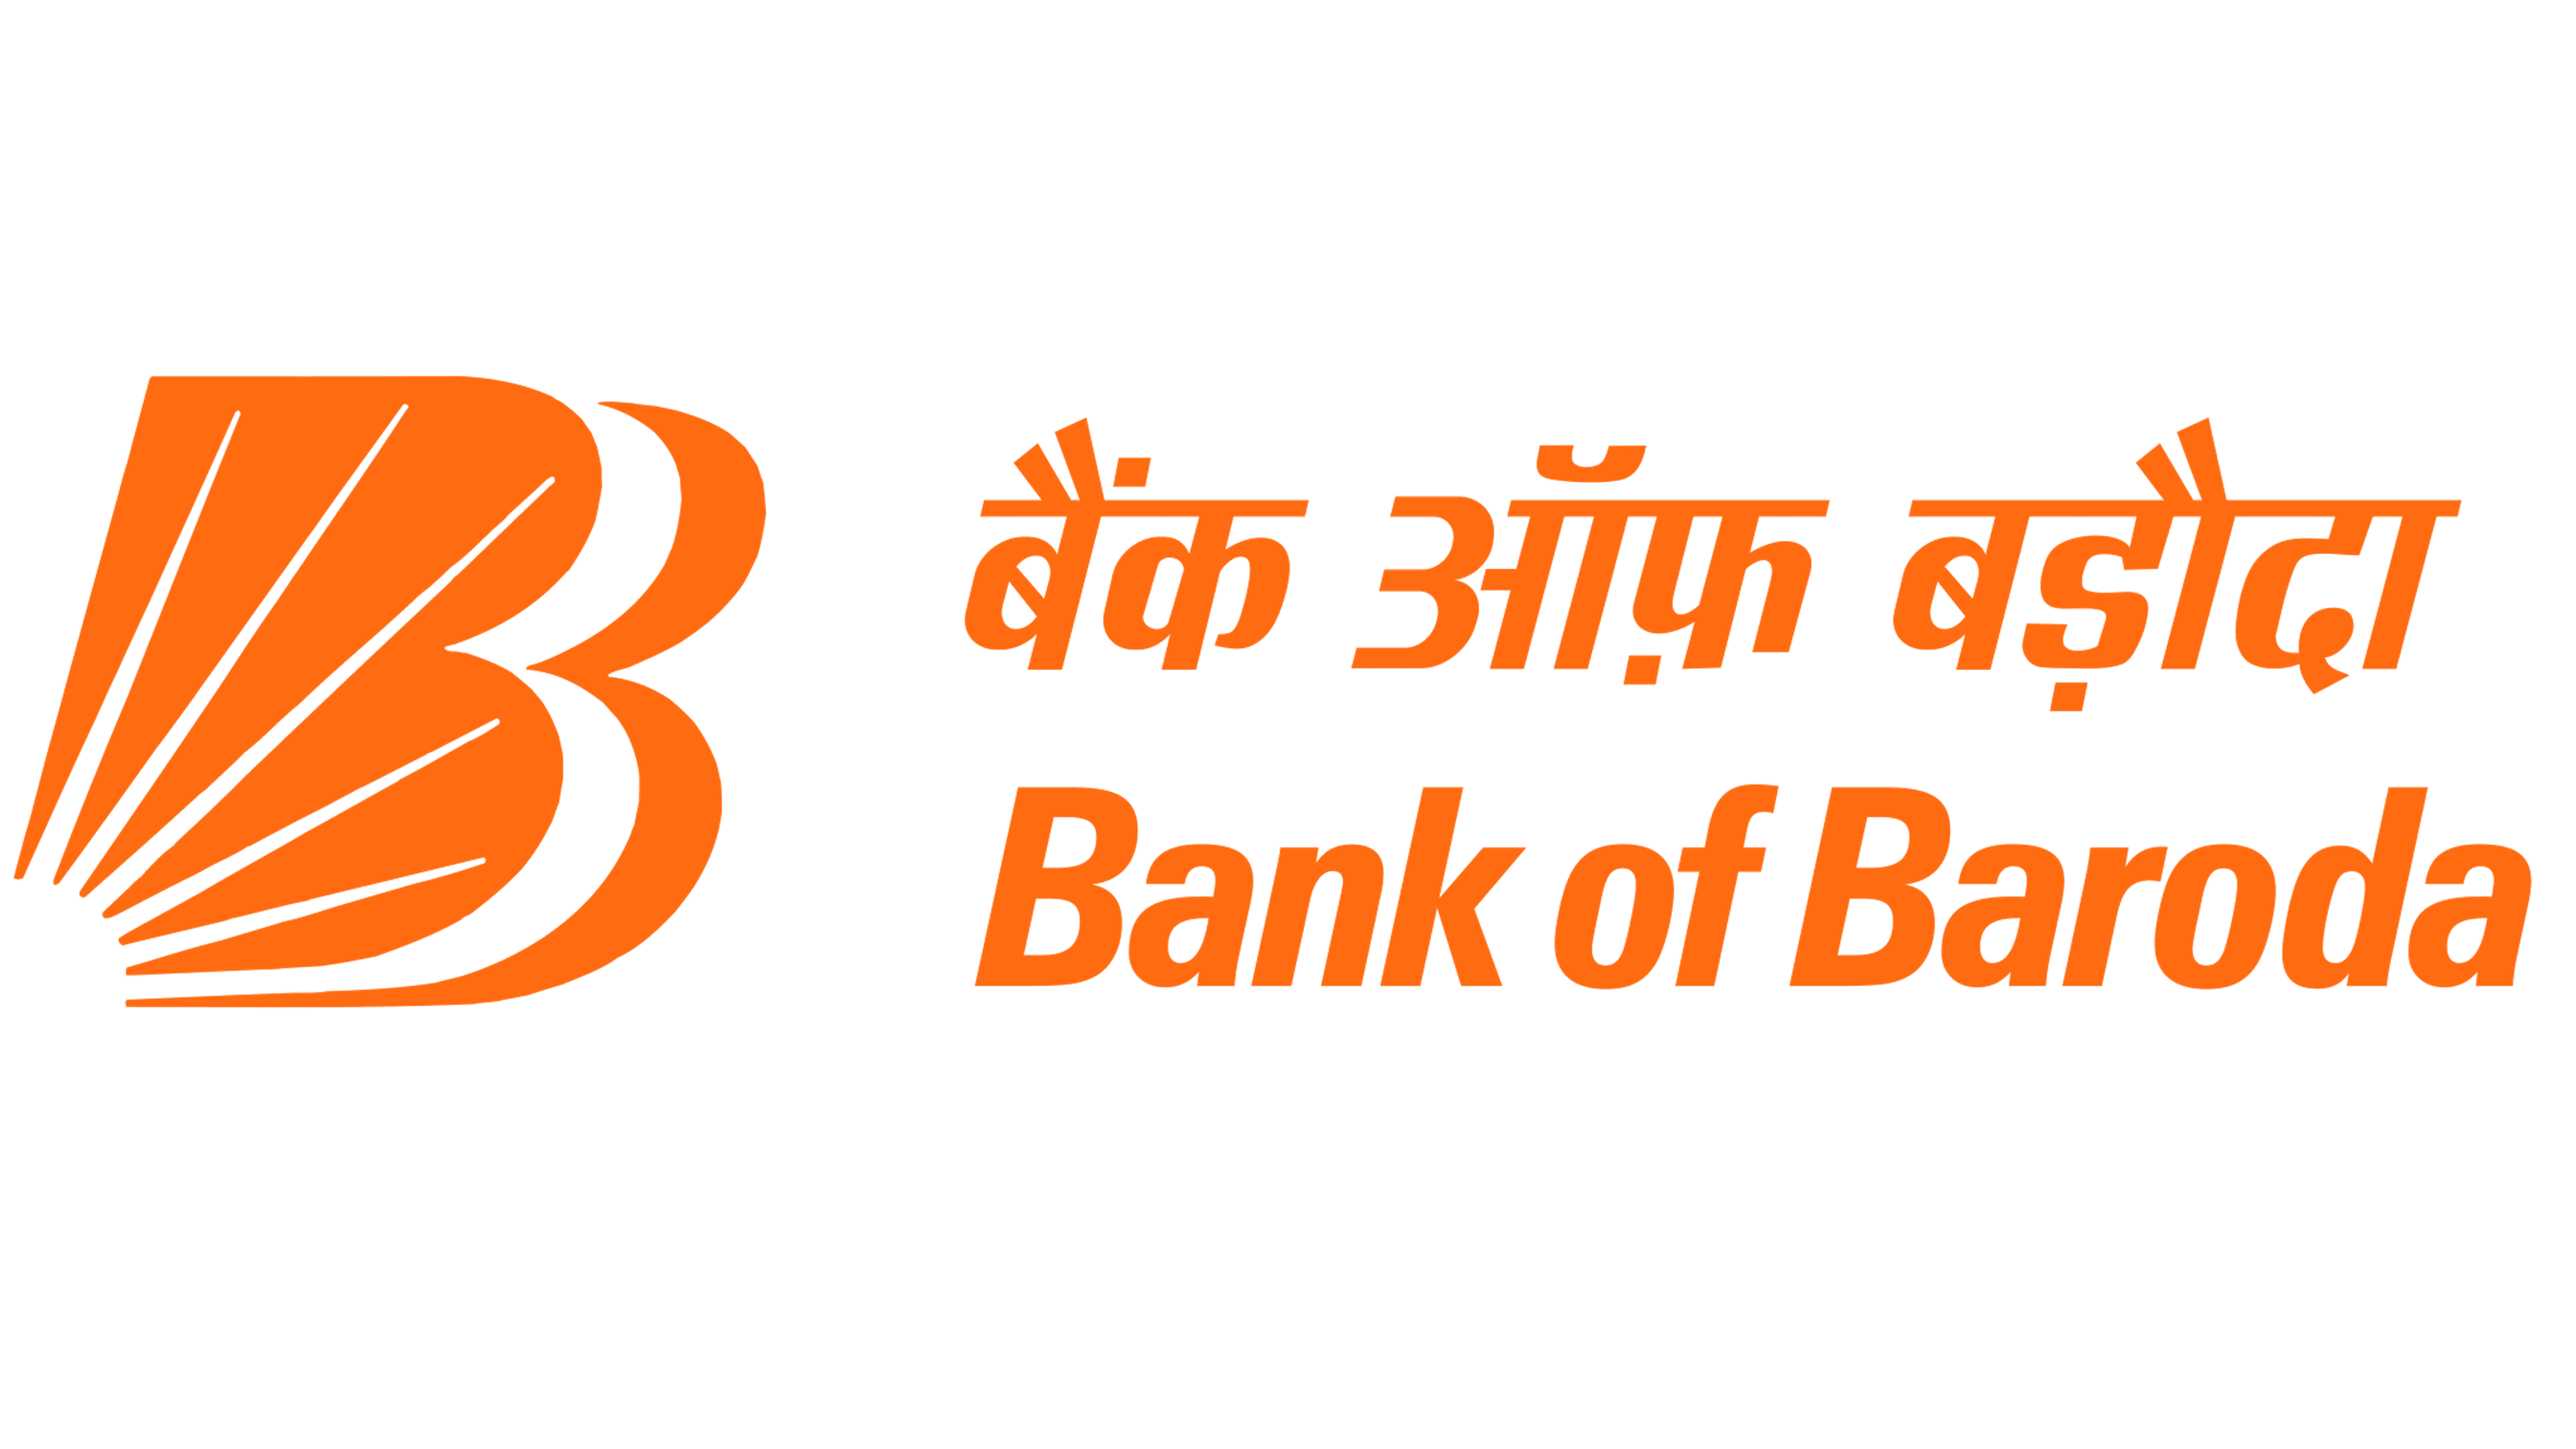 Bank of Baroda Student Loan for Abroad Study - fundmygrad